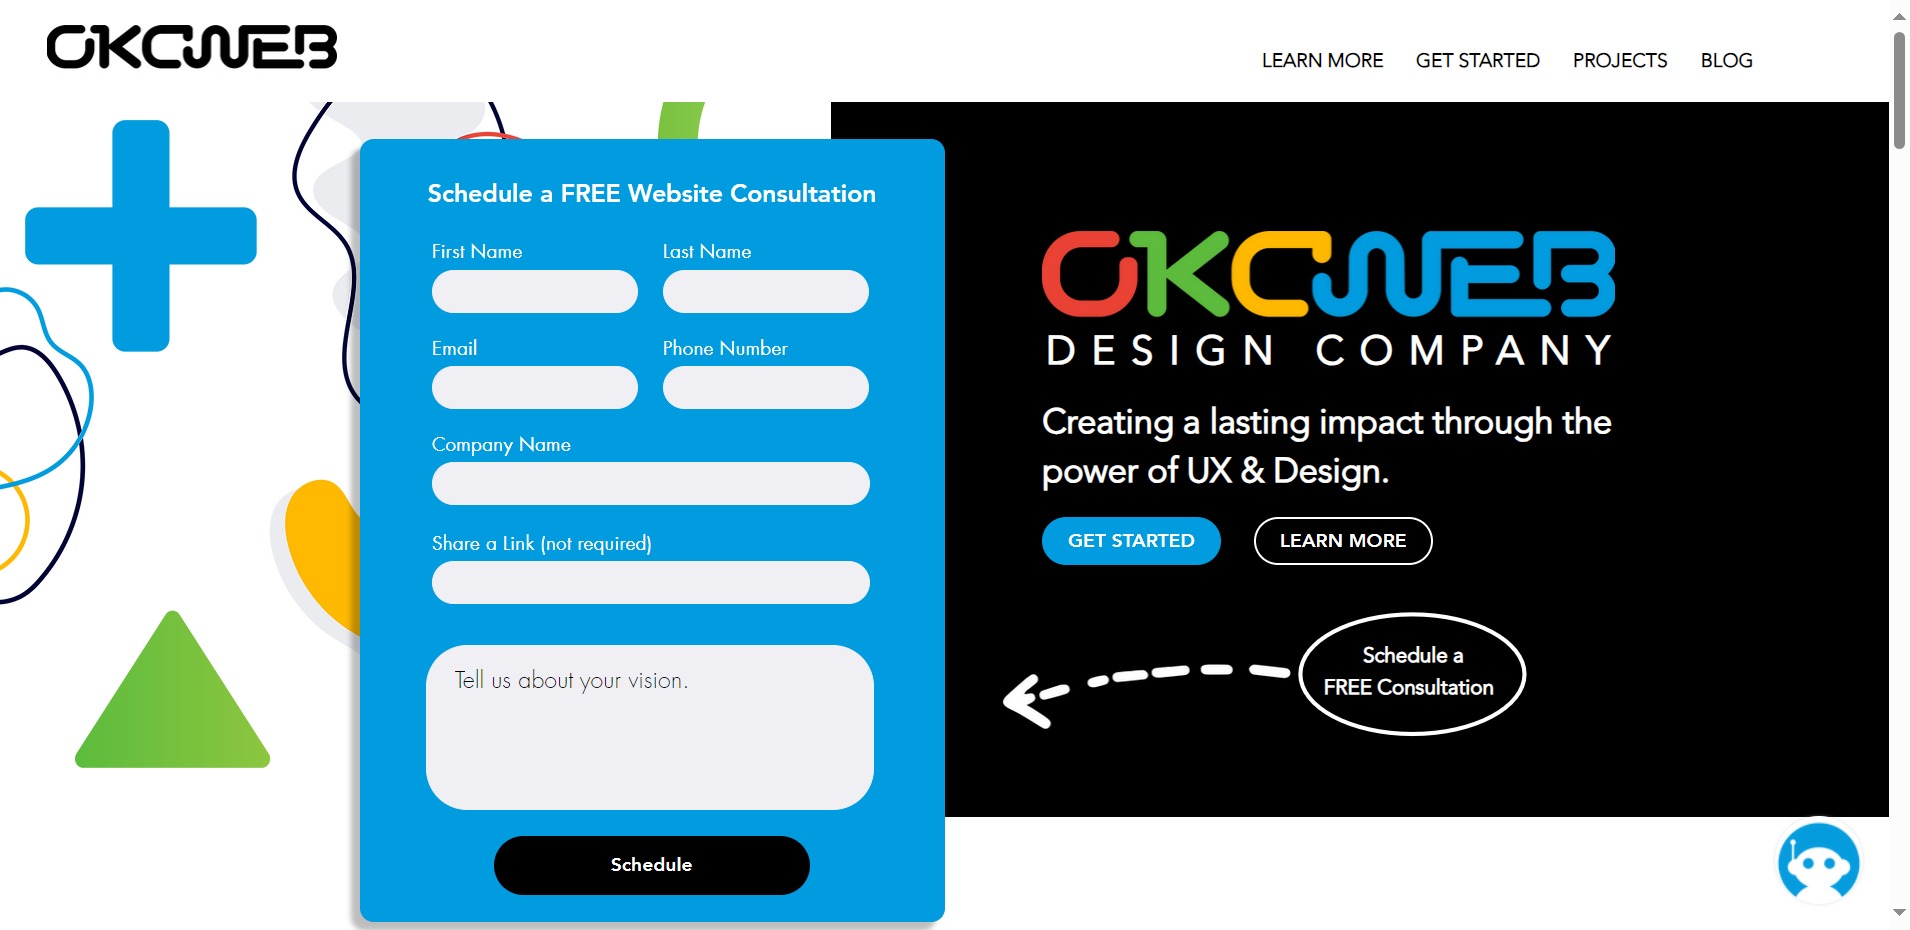 OKC Web Design Company